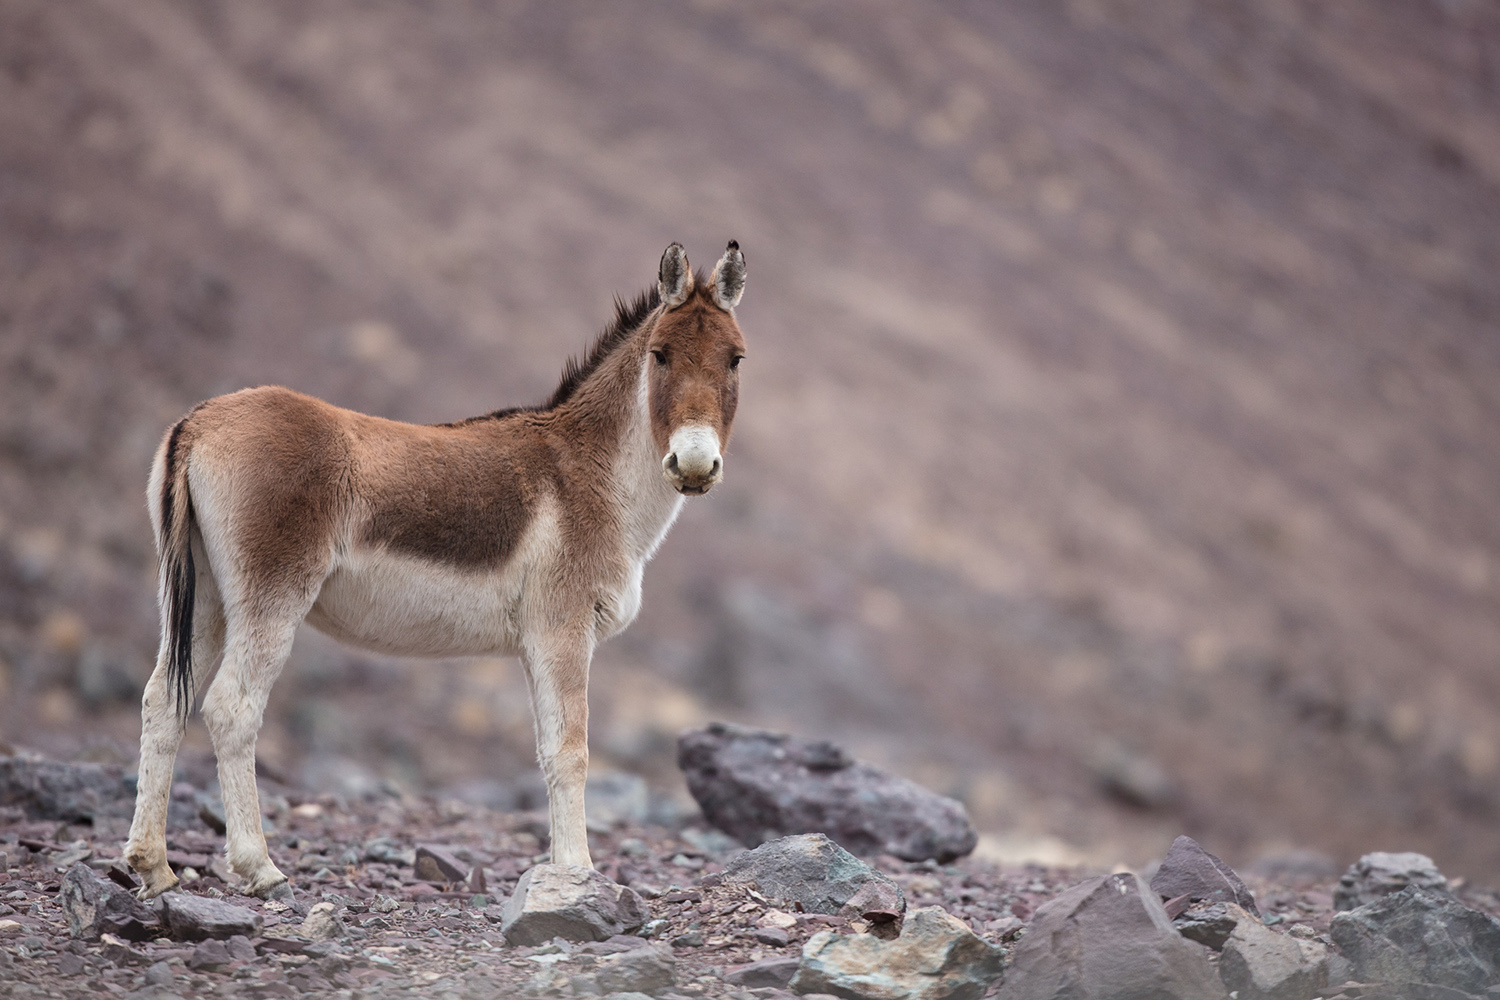 kiang, Equus kiang, un beau cheval sauvage du Ladakh et du Chang Tang